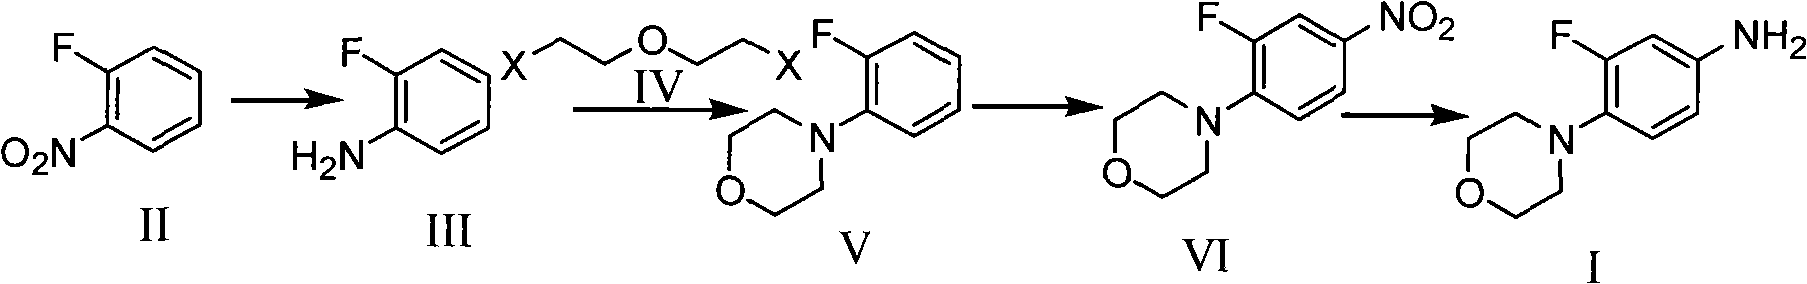 Method for preparing 3-fluorine-4 morpholinyl phenylamine